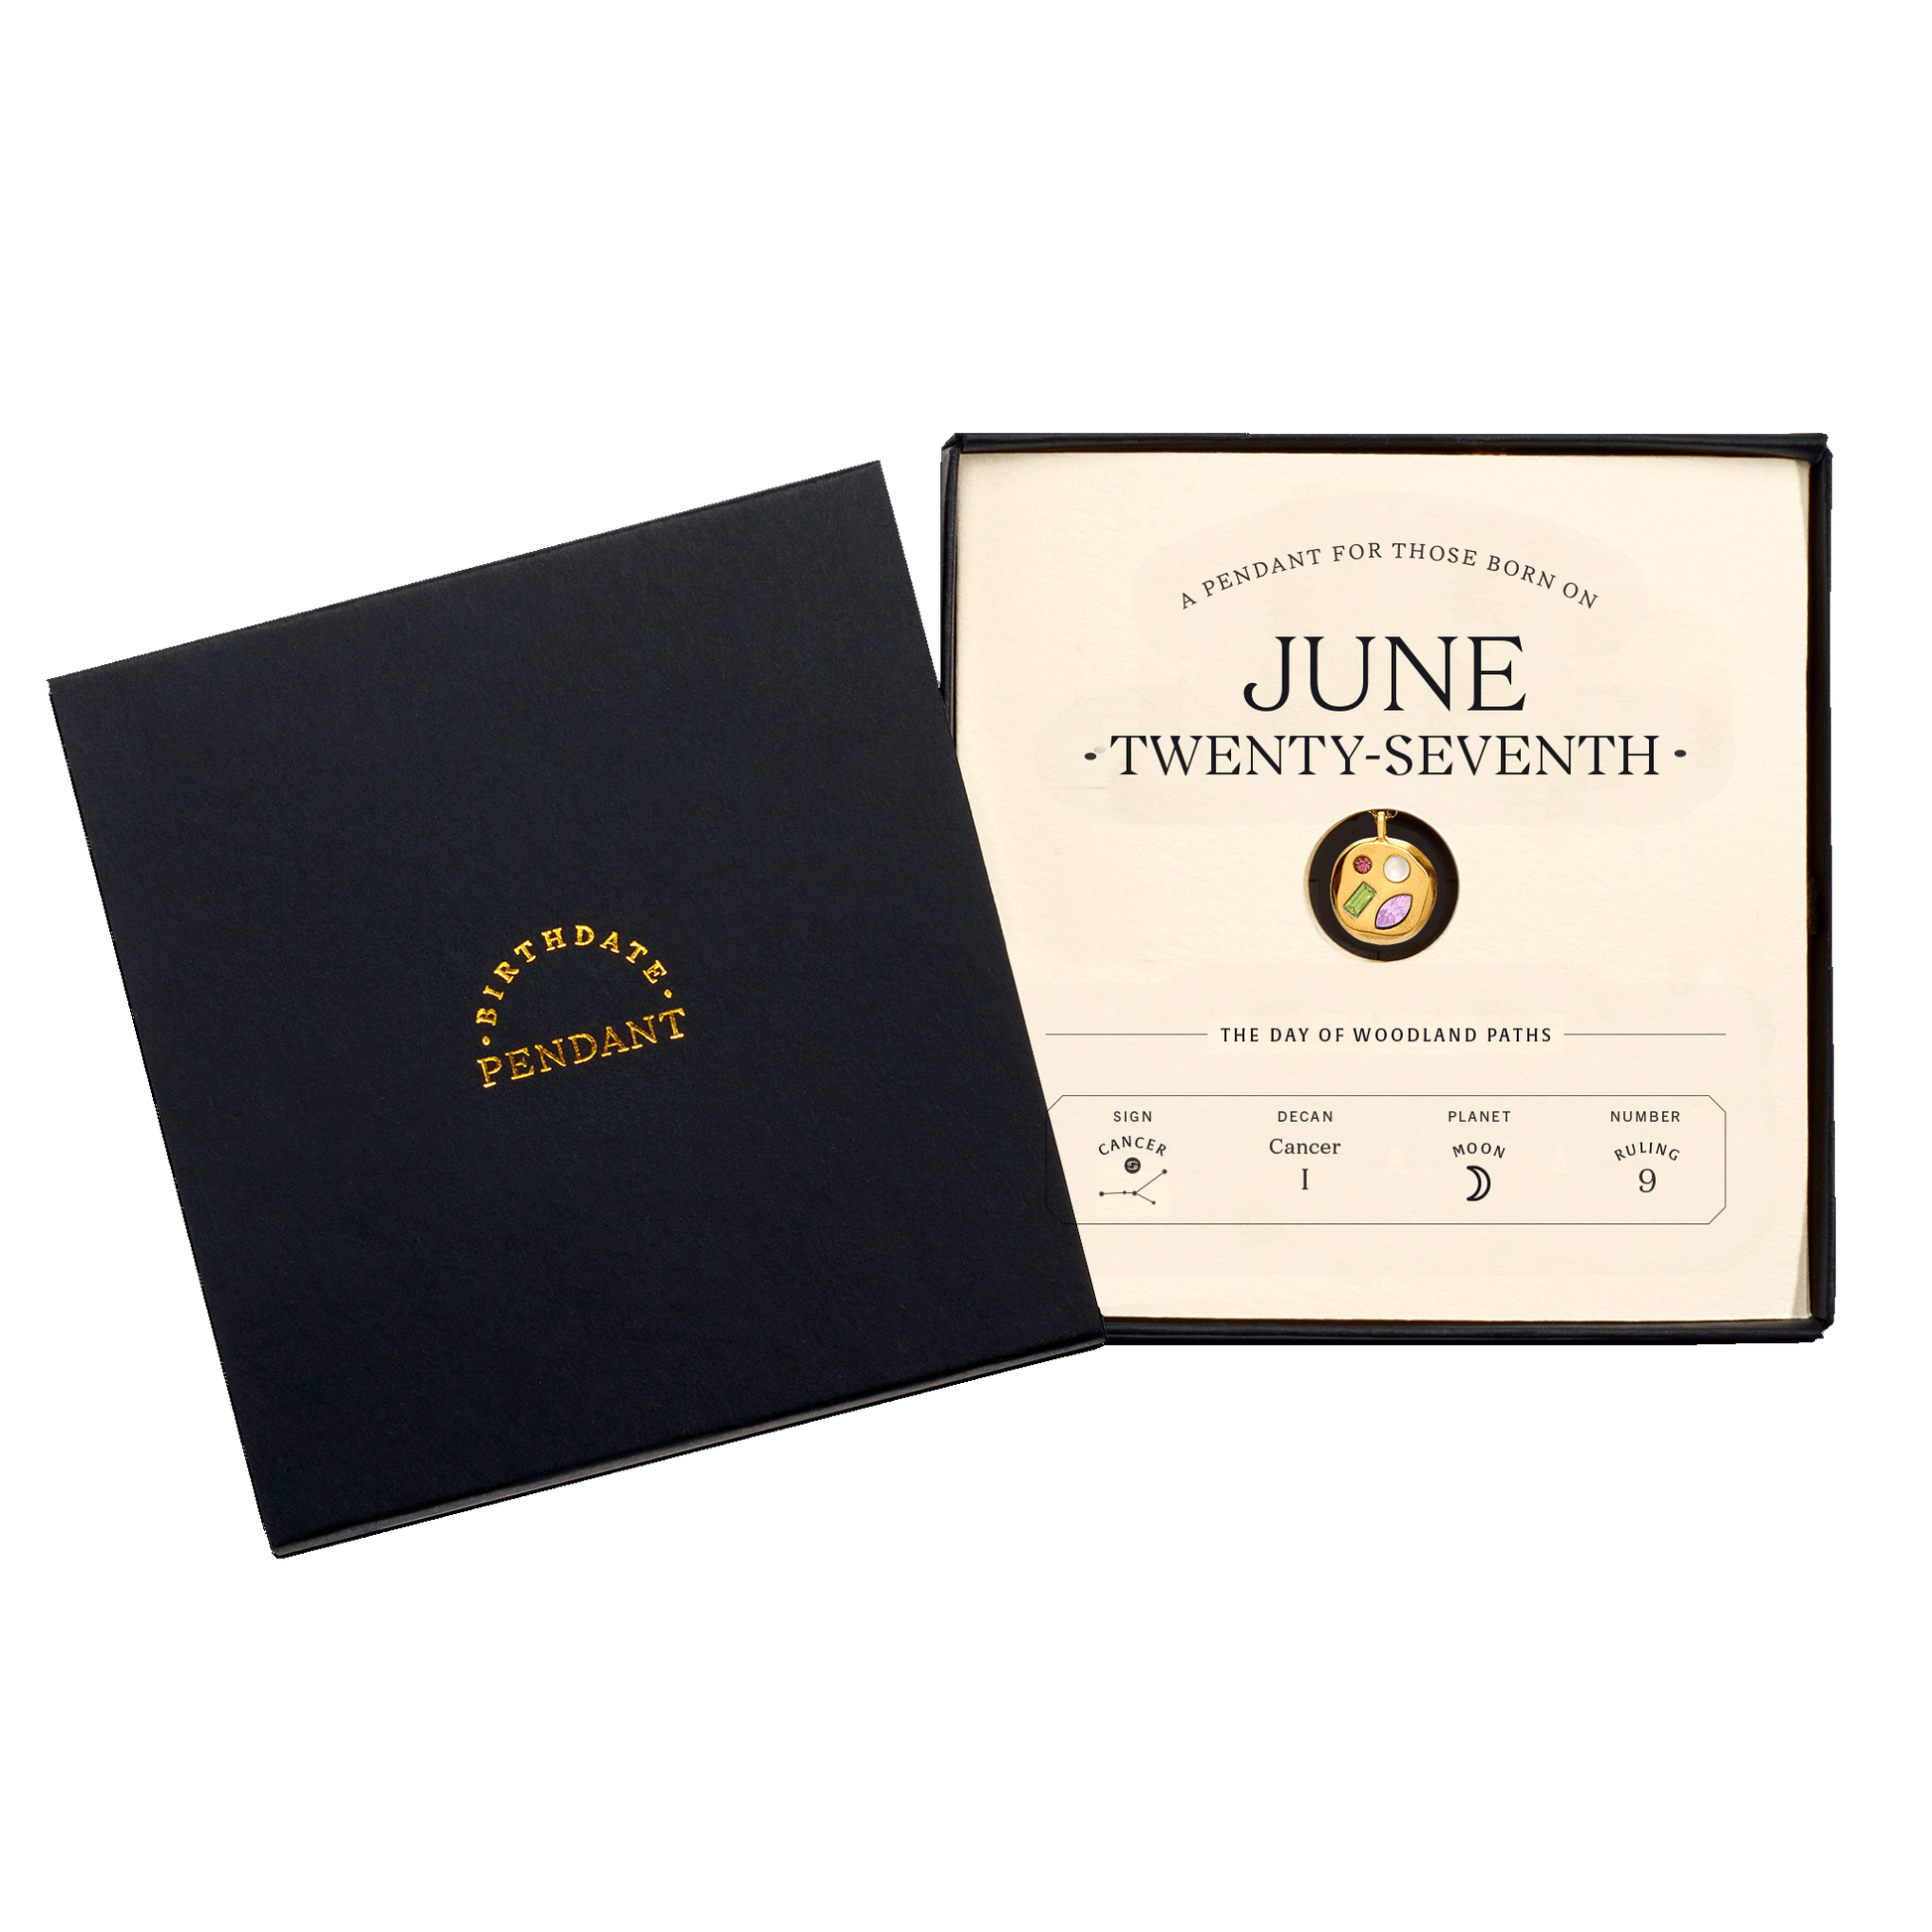 The June Twenty-Seventh Pendant inside its box